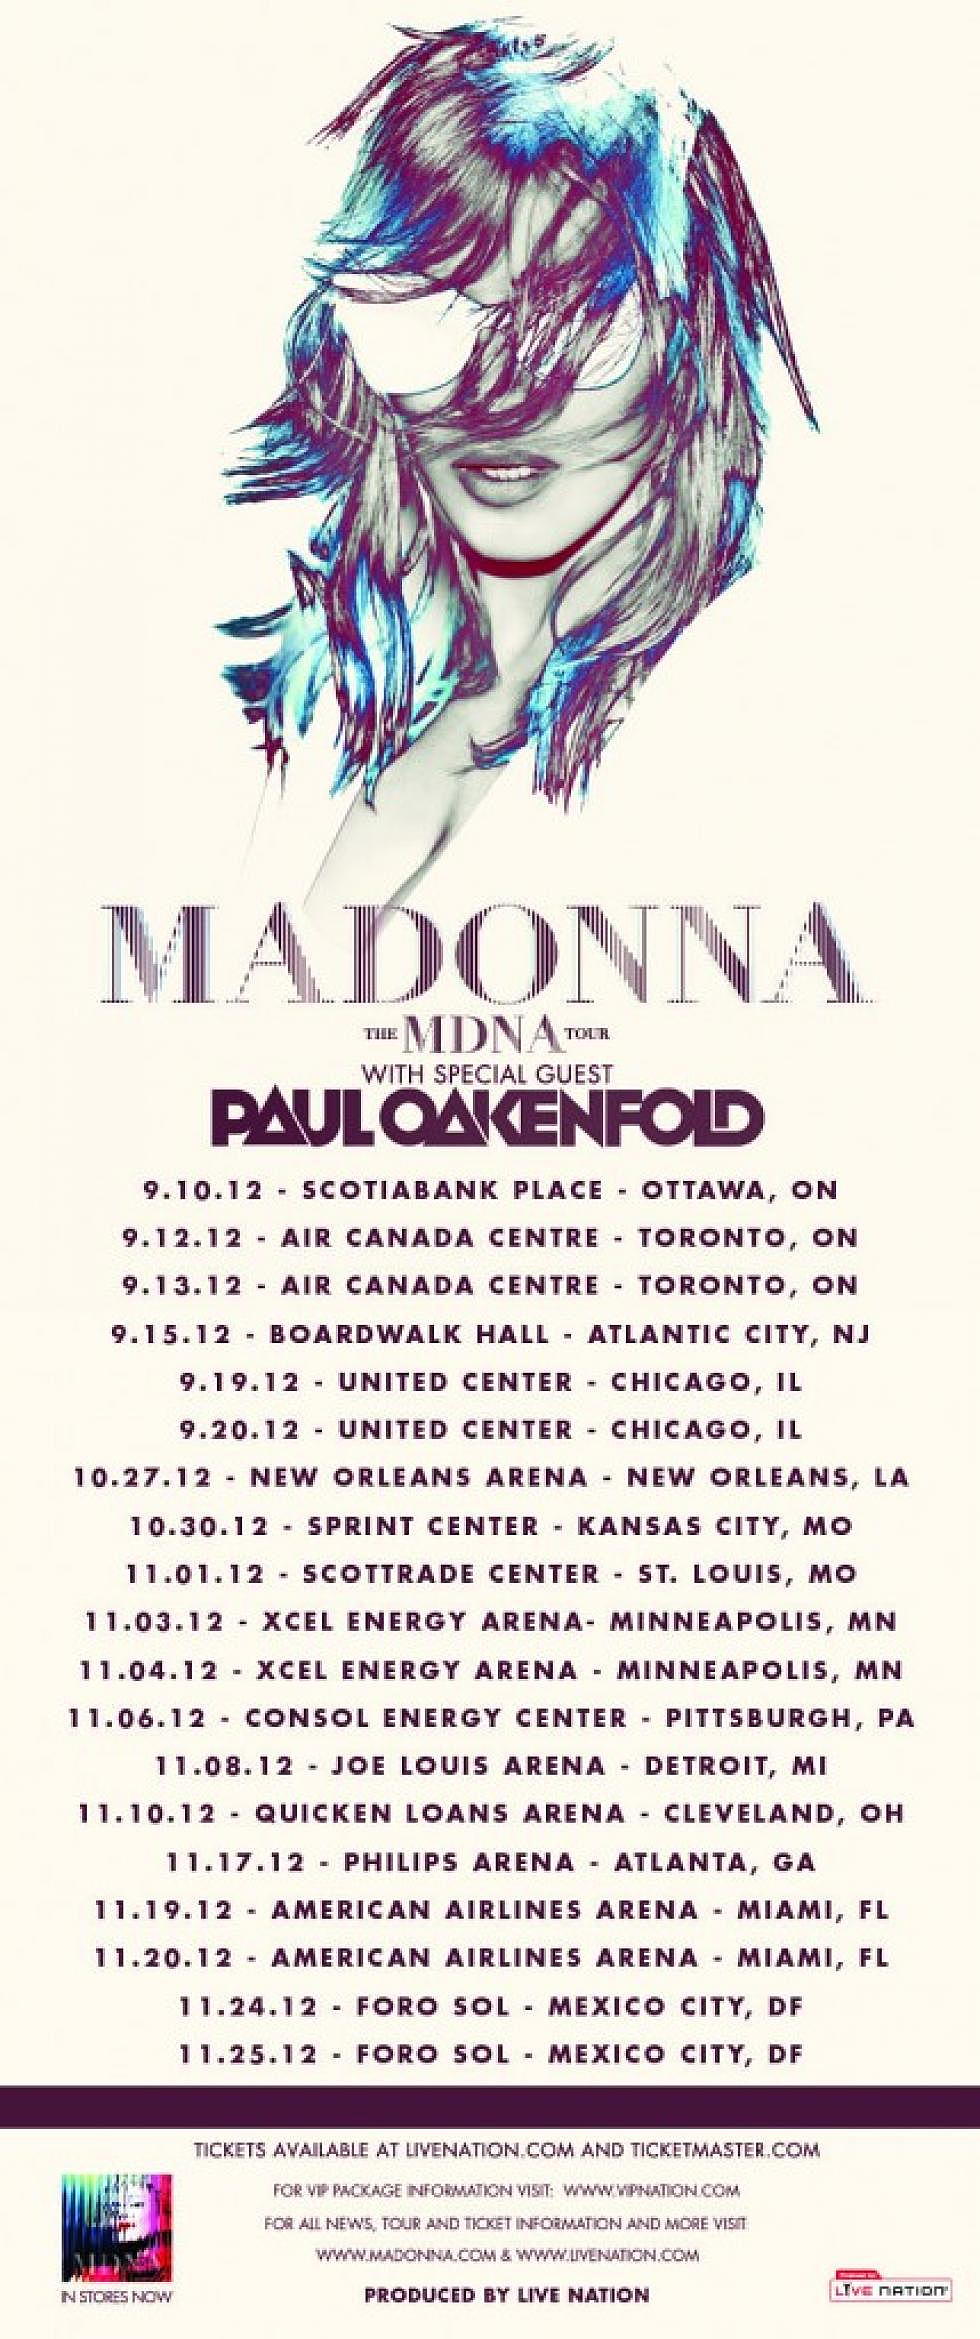 Paul Oakenfold MDNA Tour Dates